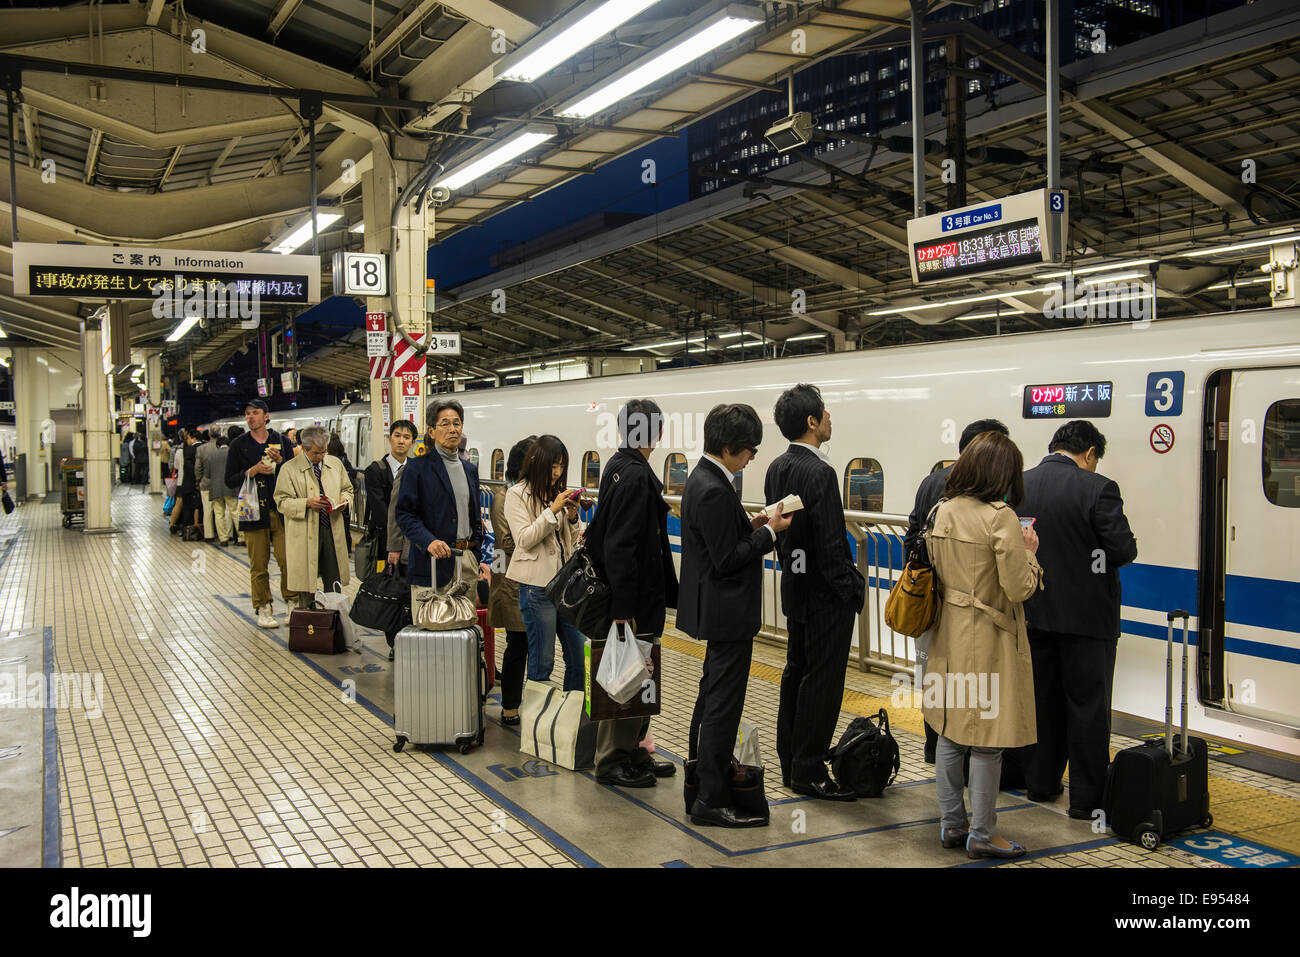 Passengers waiting in line, Shinkansen train station, Tokyo, Japan Stock Photo